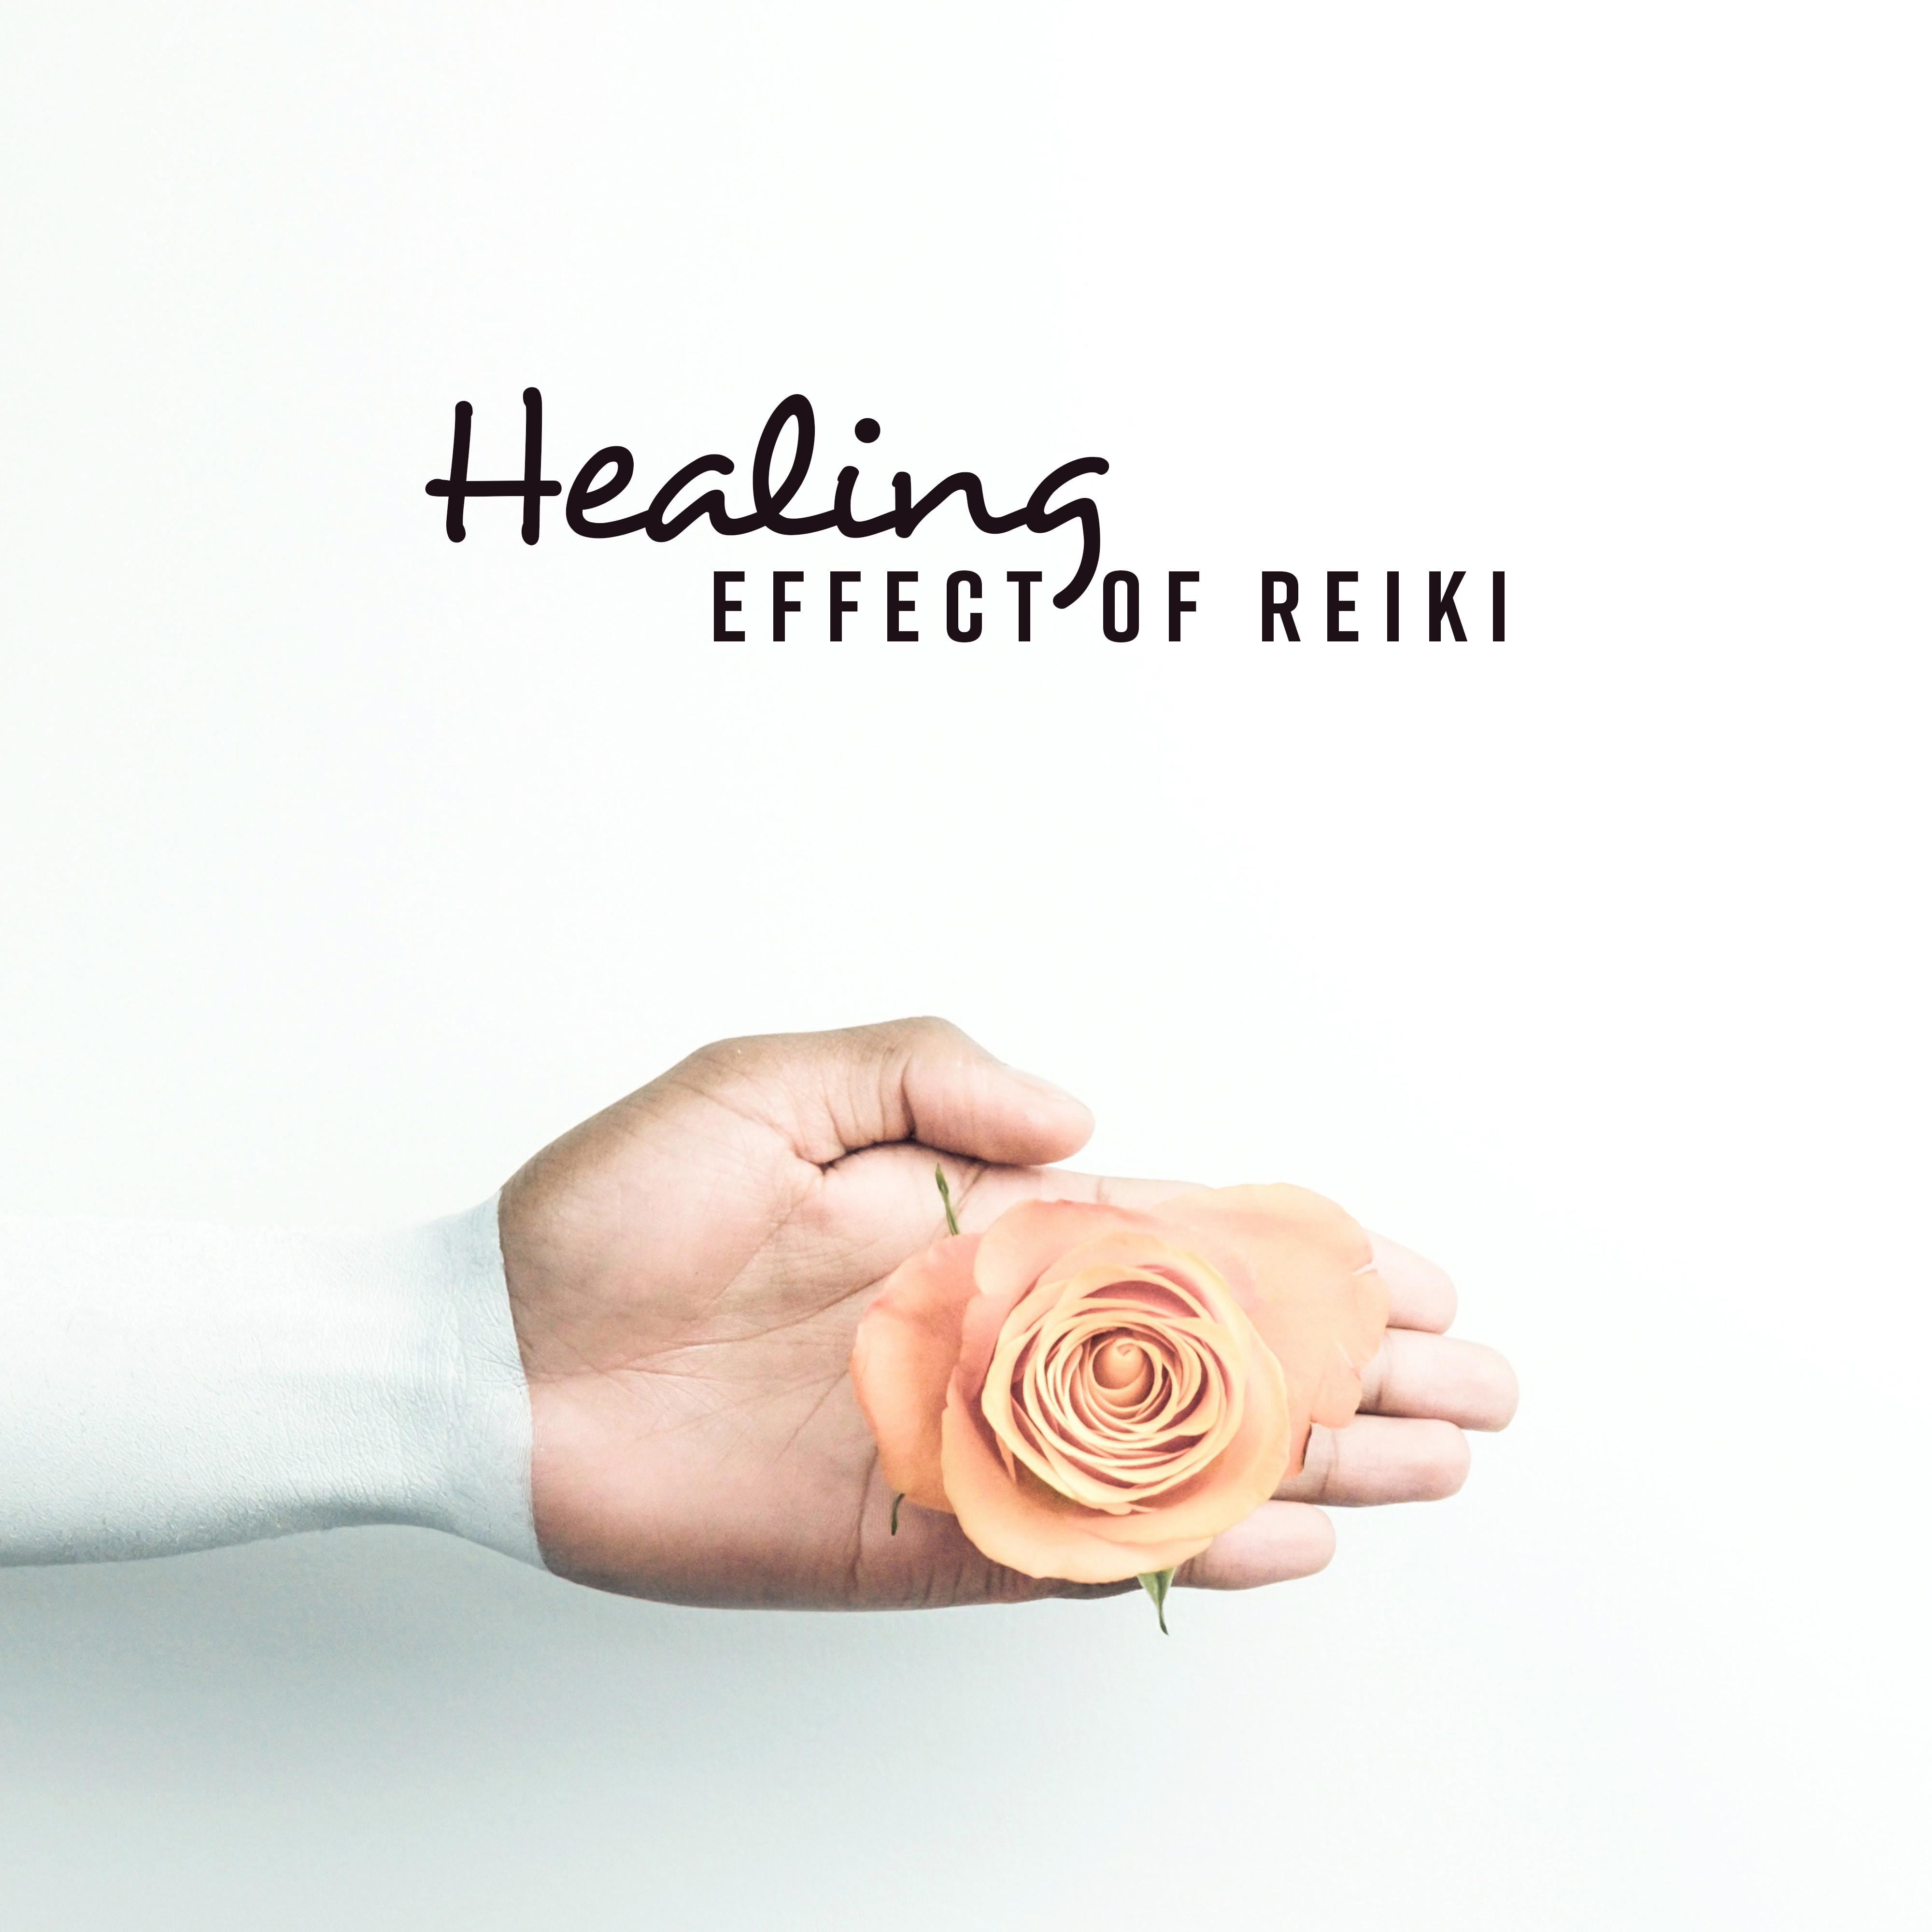 Healing Effect of Reiki: Healing Life Energy